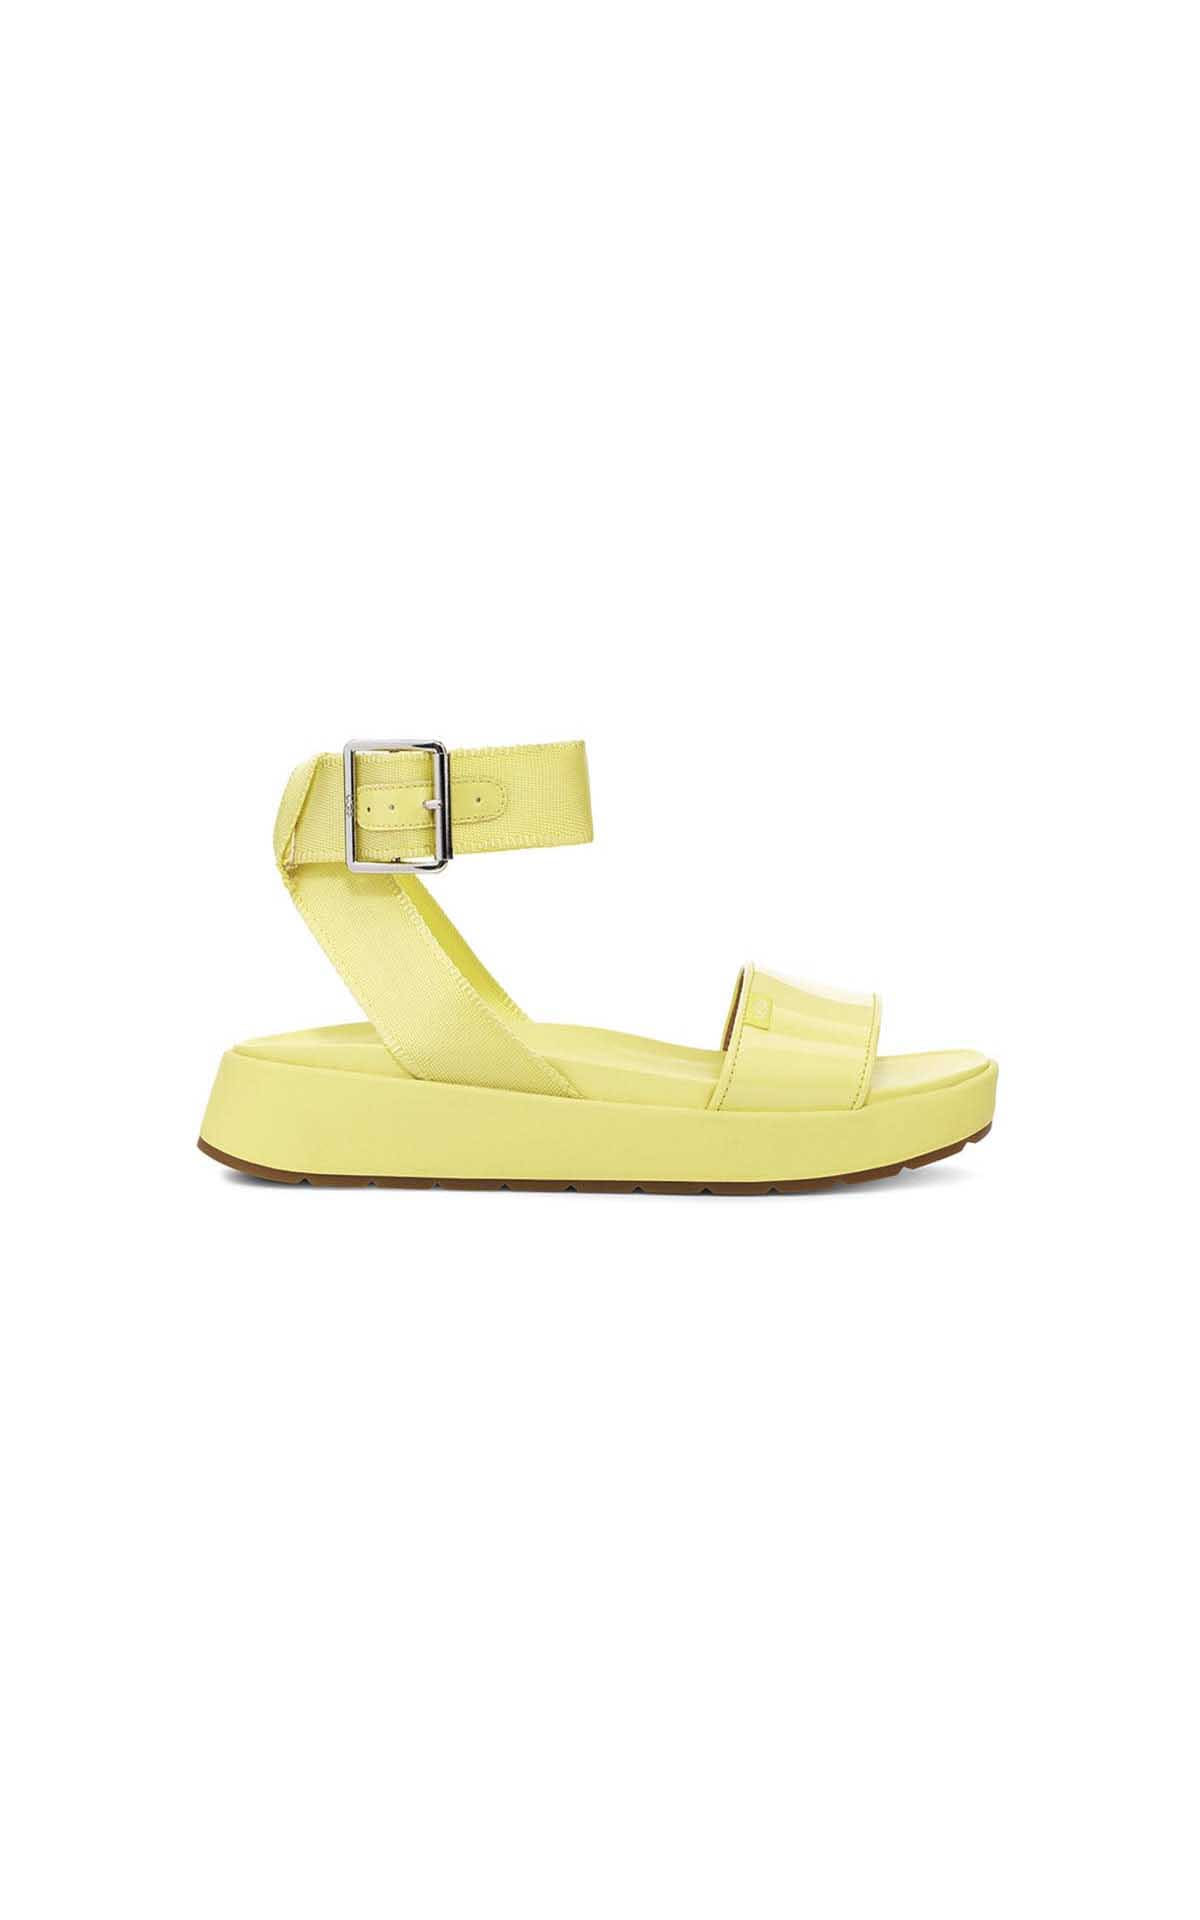 UGG yellow sandal